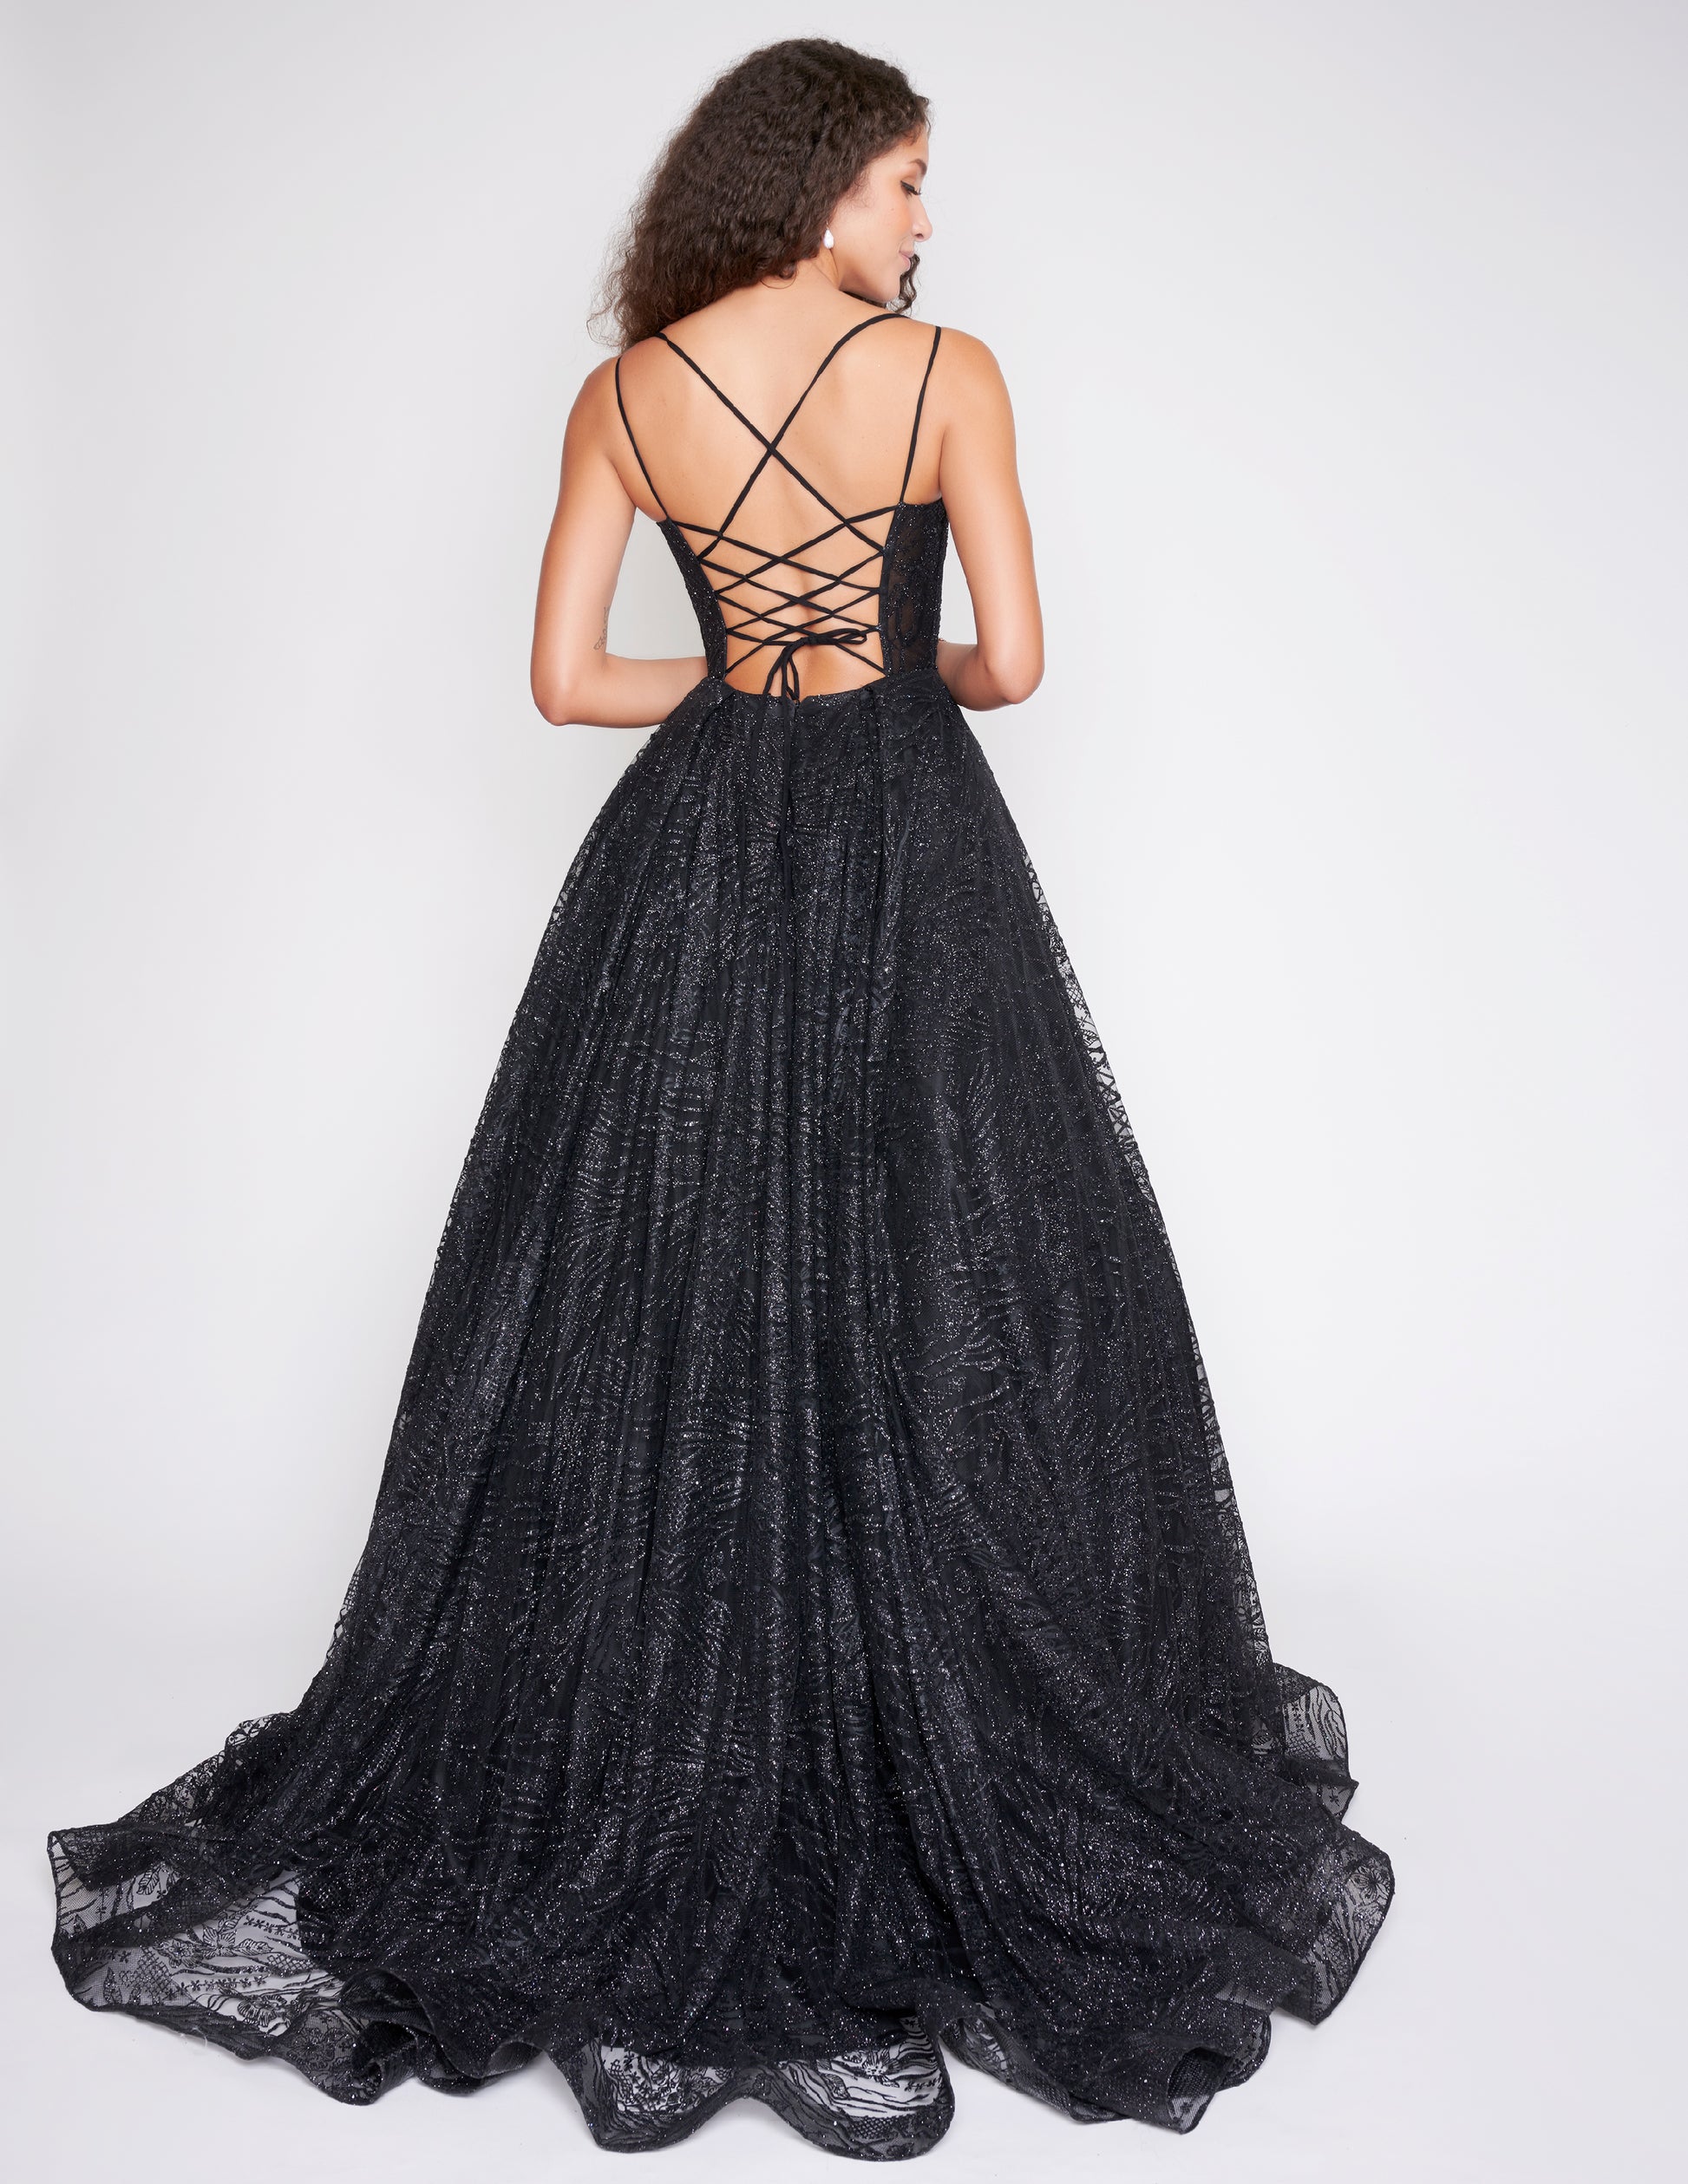 Nina Canacci 8220 Black Shimmer Ballgown with backless corset design and v neckline